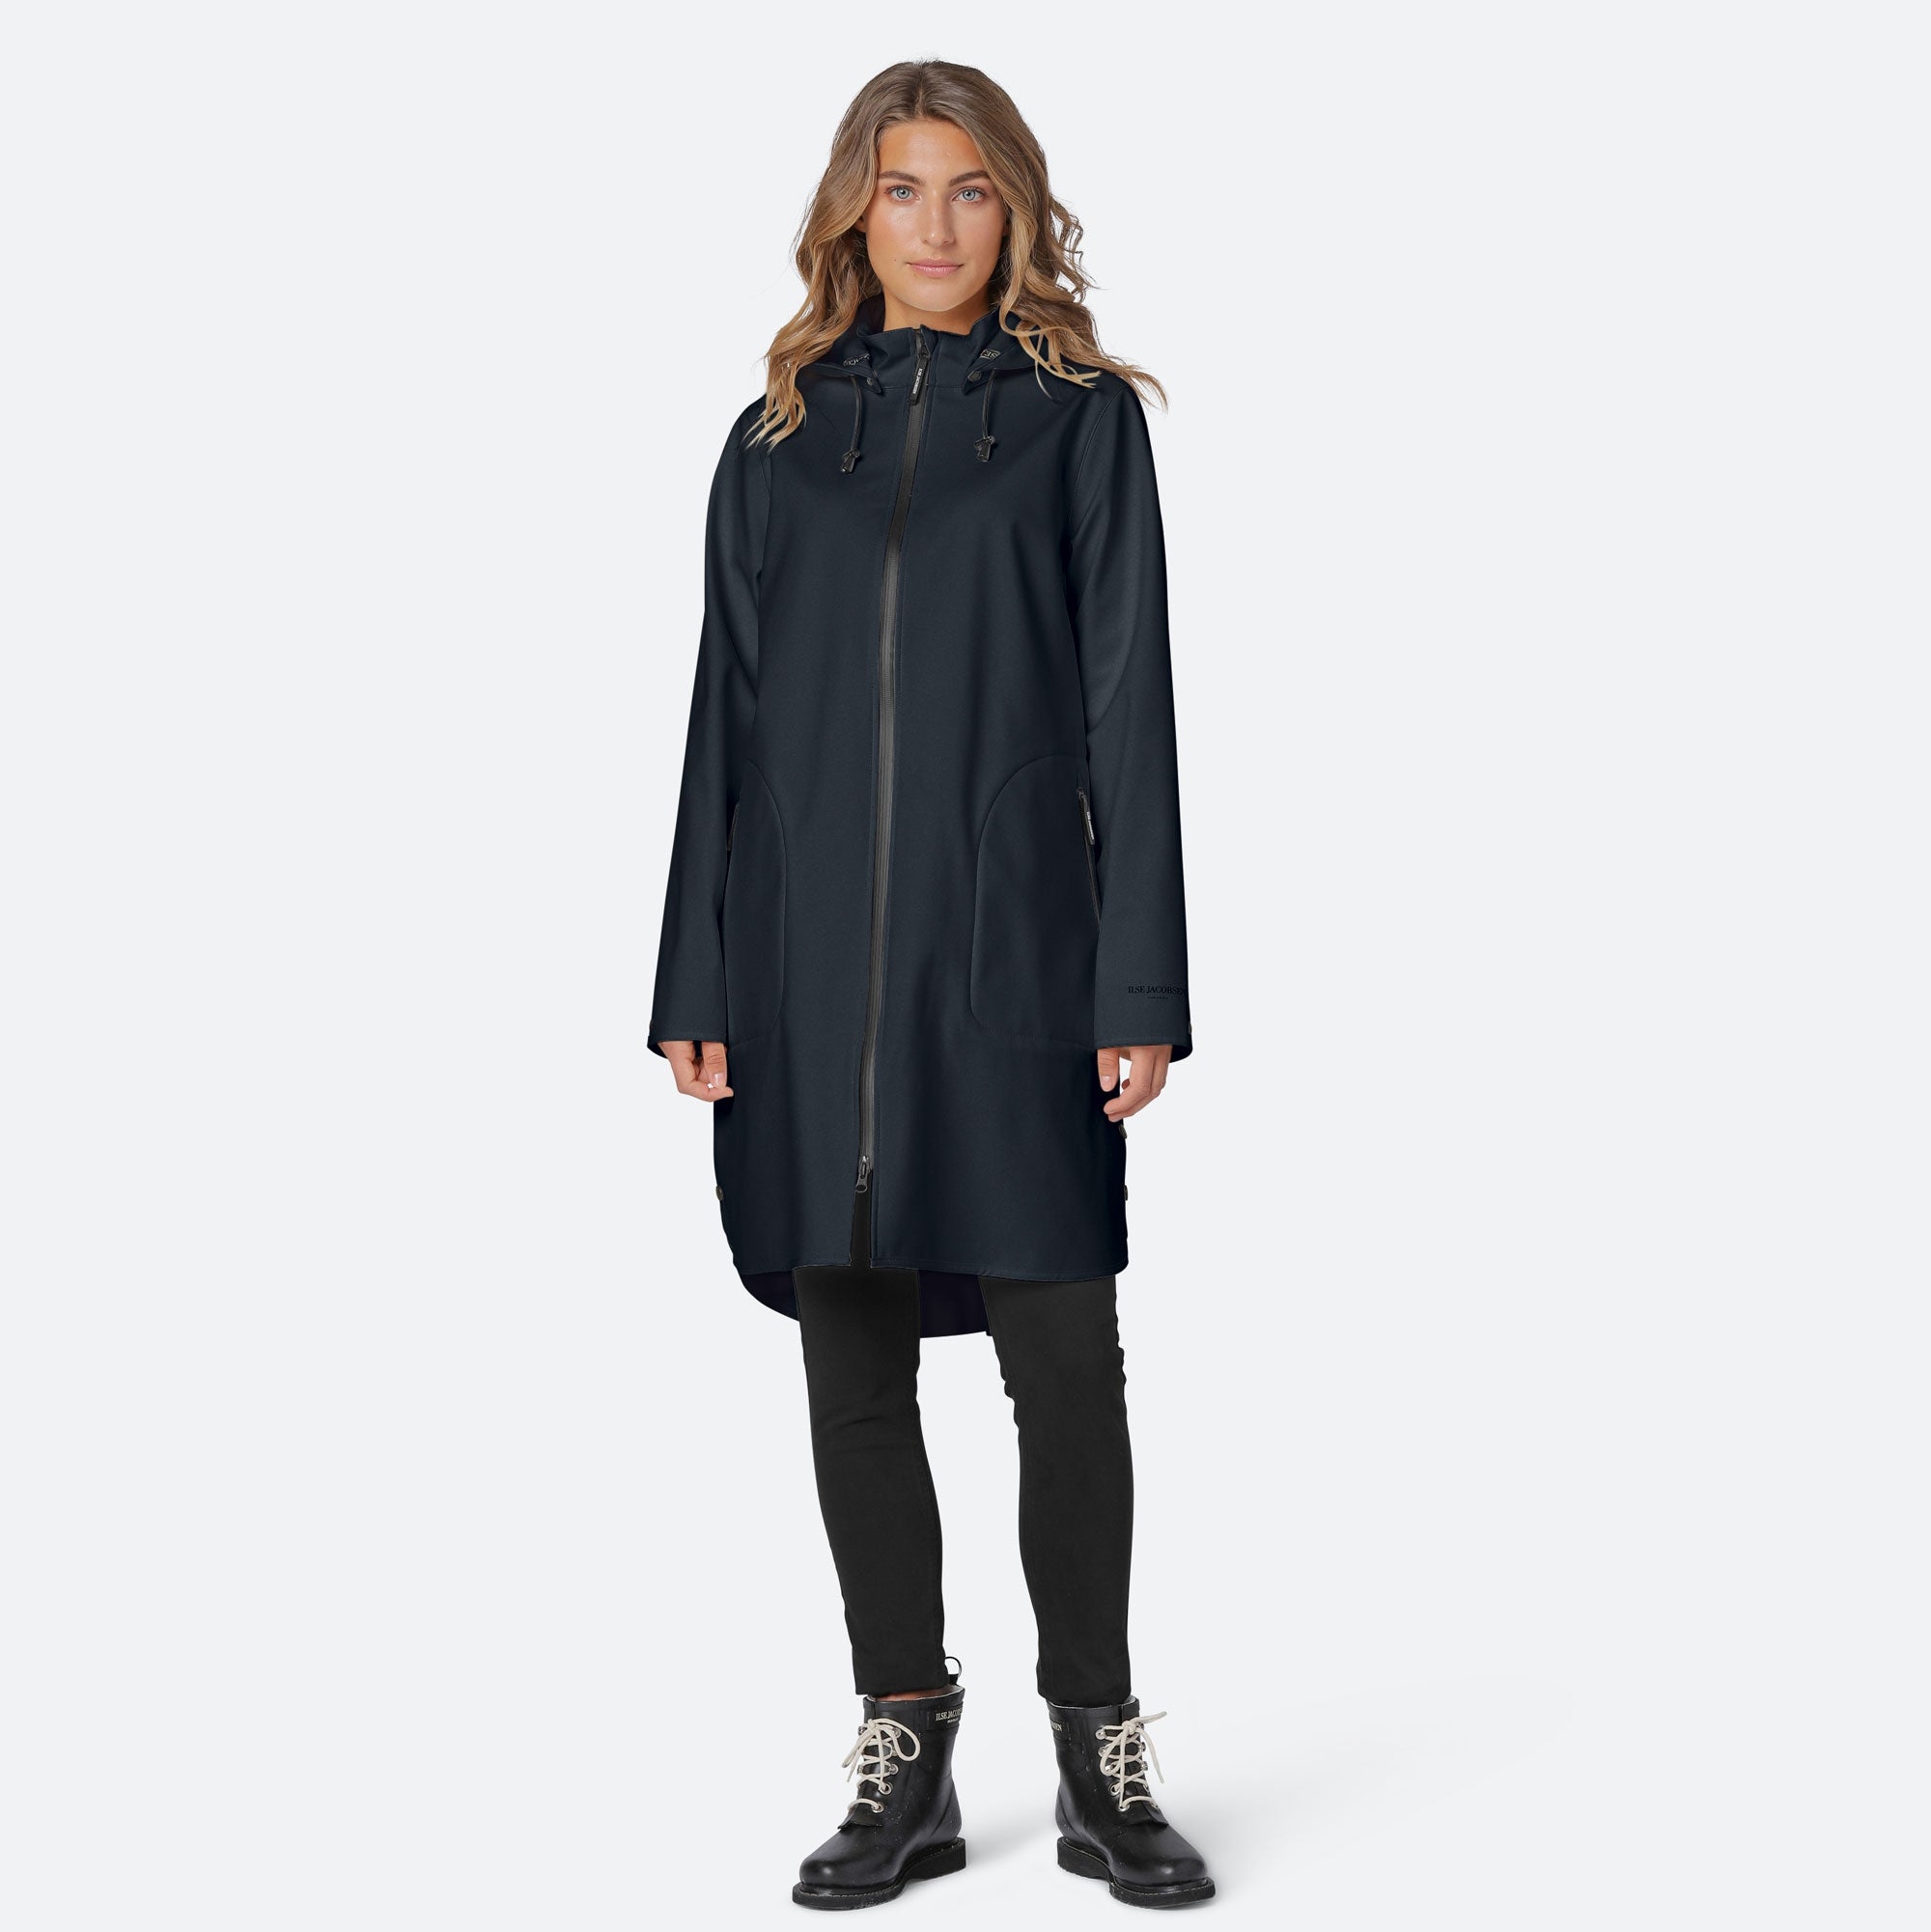 Raincoat RAIN128 - 001 Black | Black